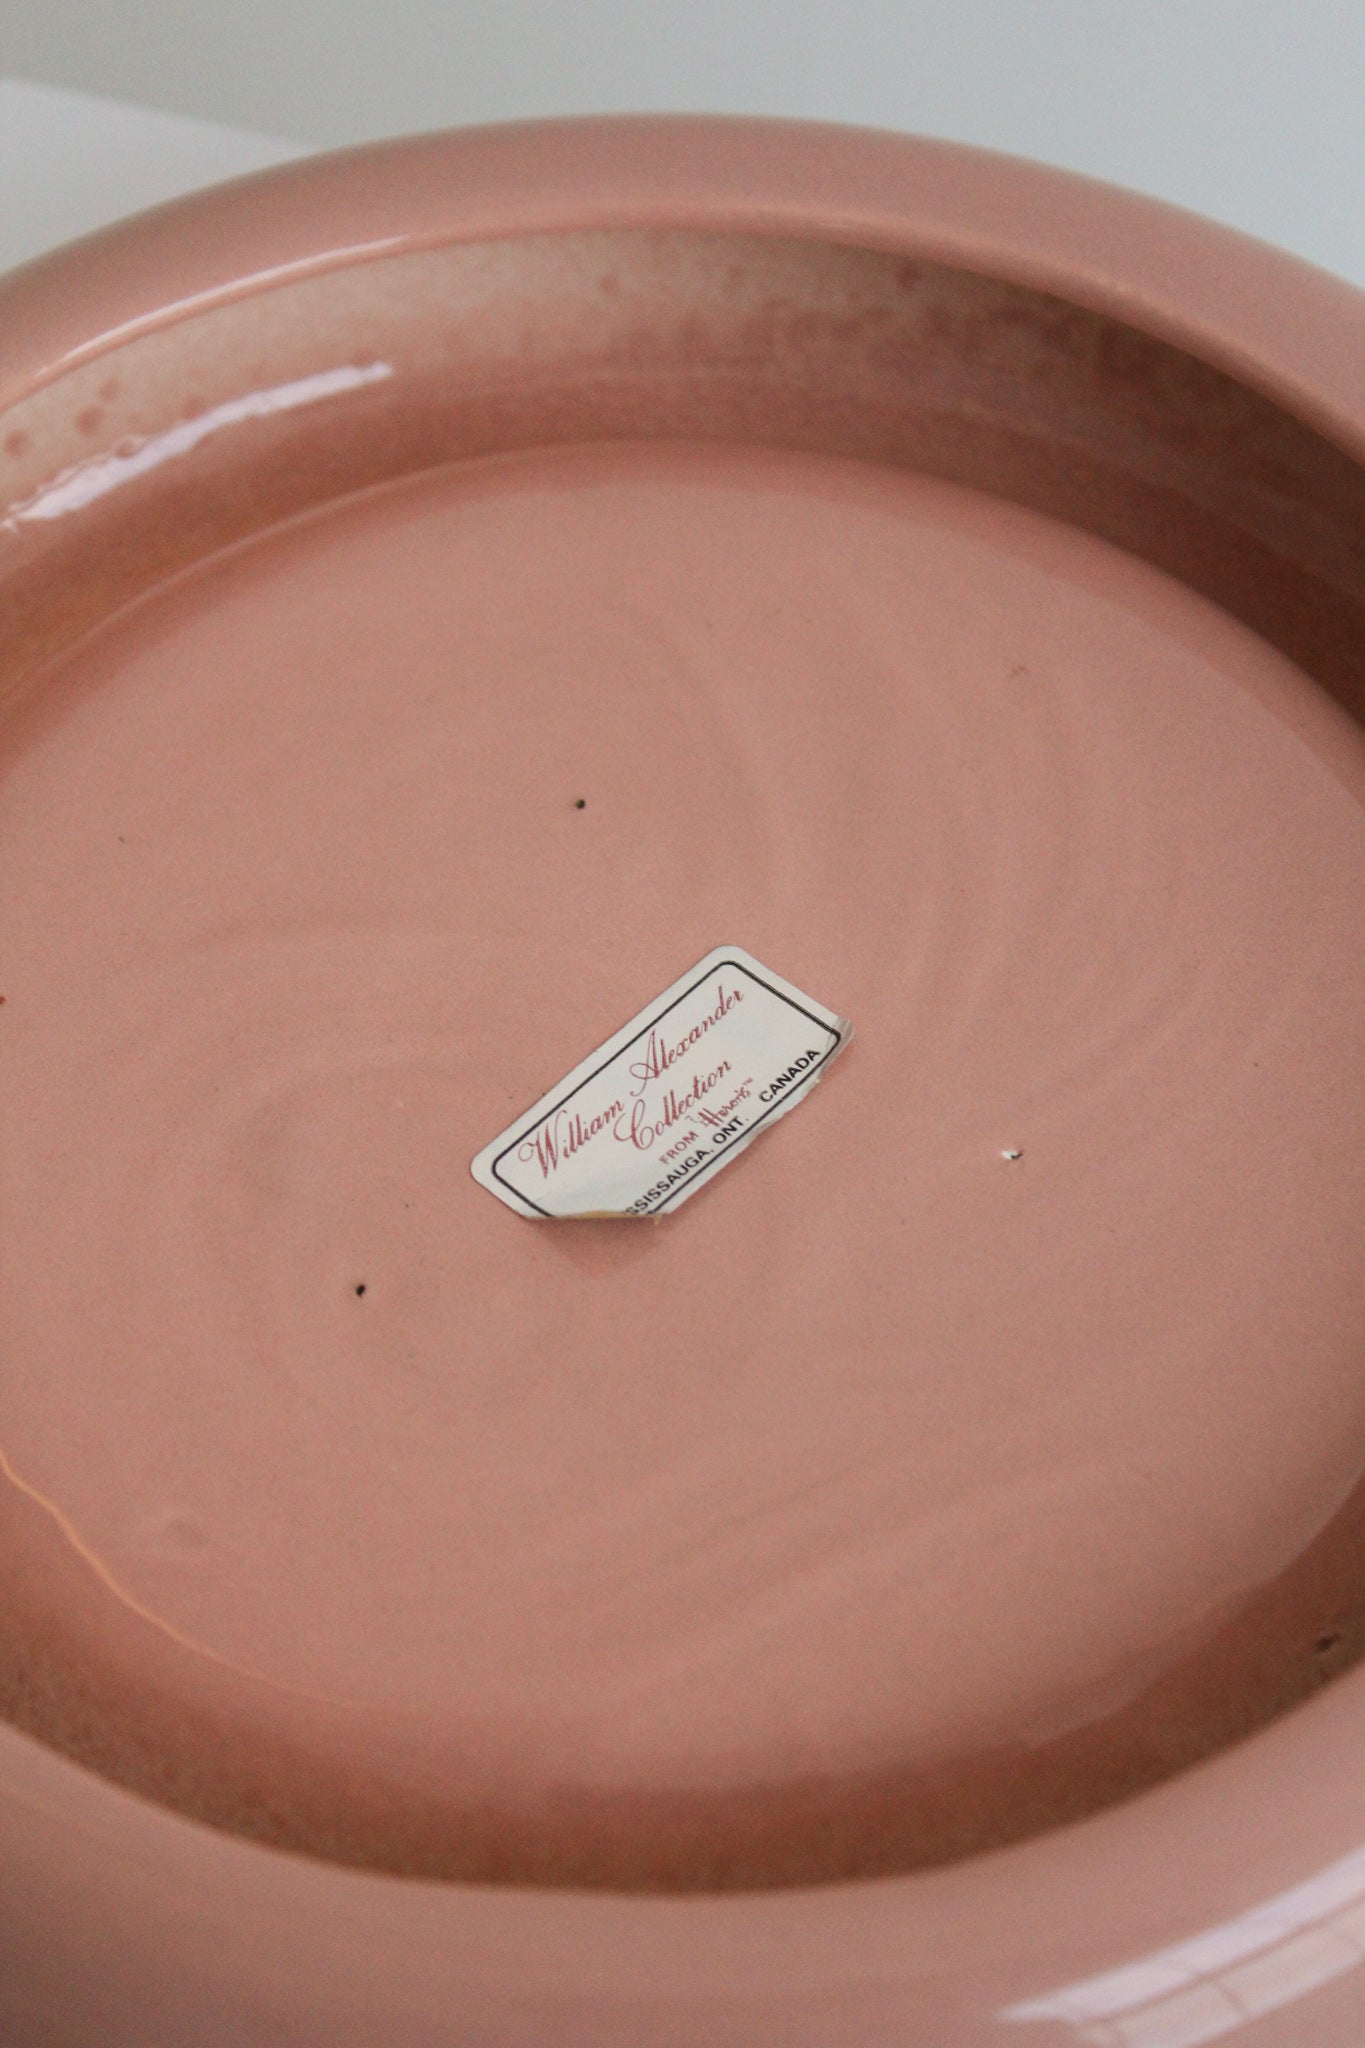 Pink Ceramic Cigar Ashtray